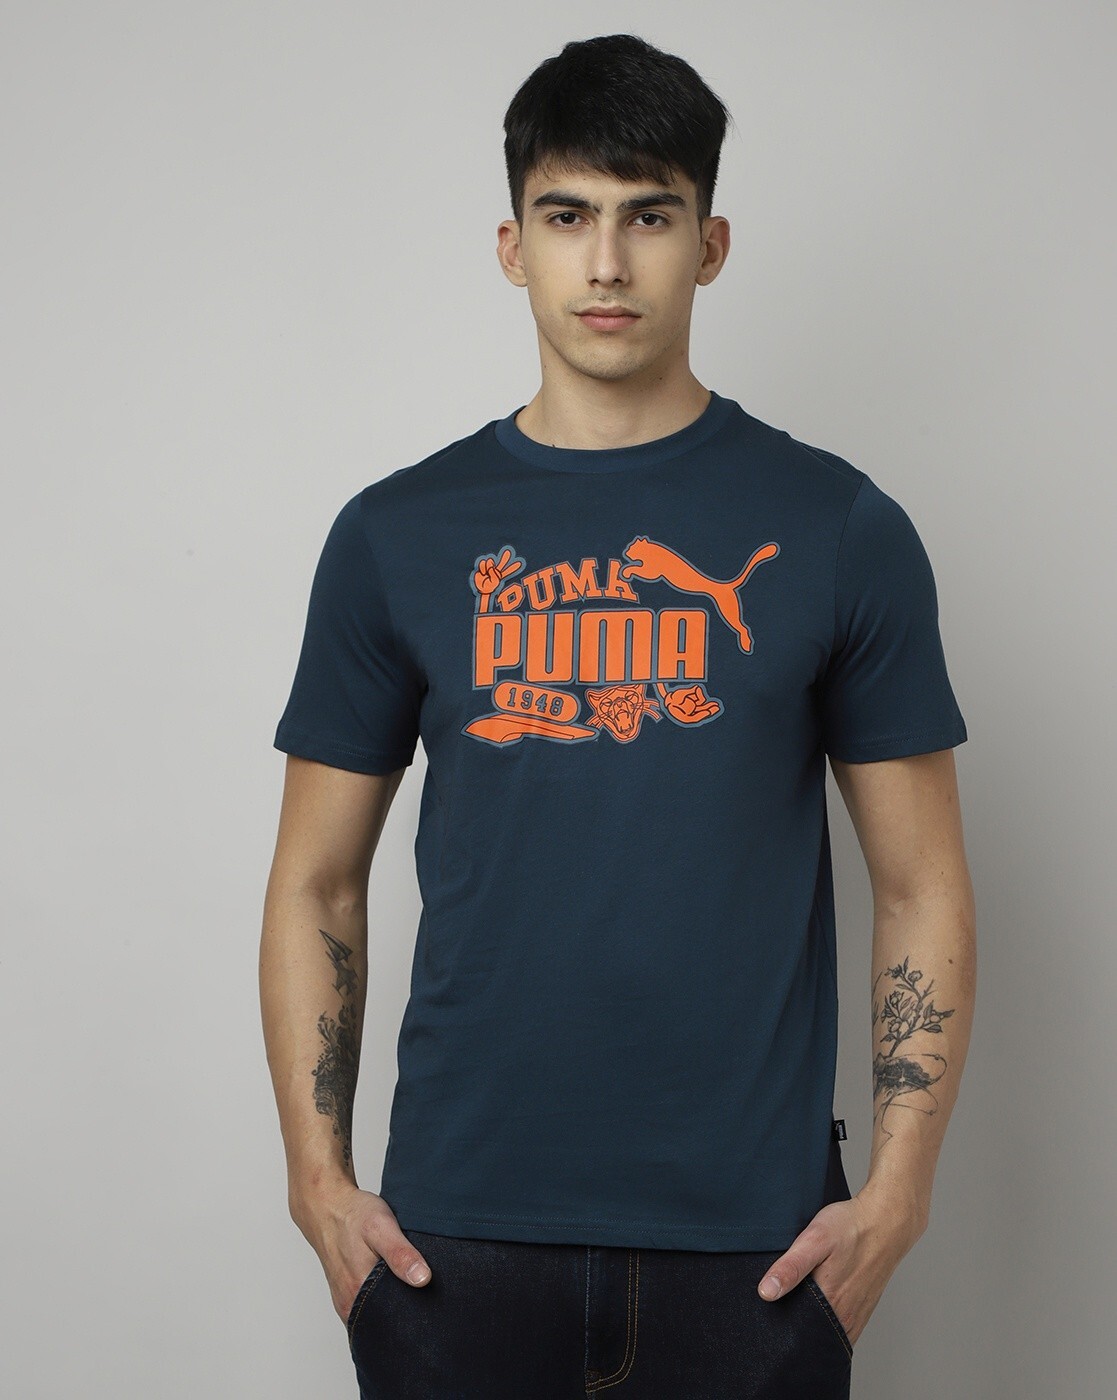 Buy Blue Tshirts for Men Puma by Online